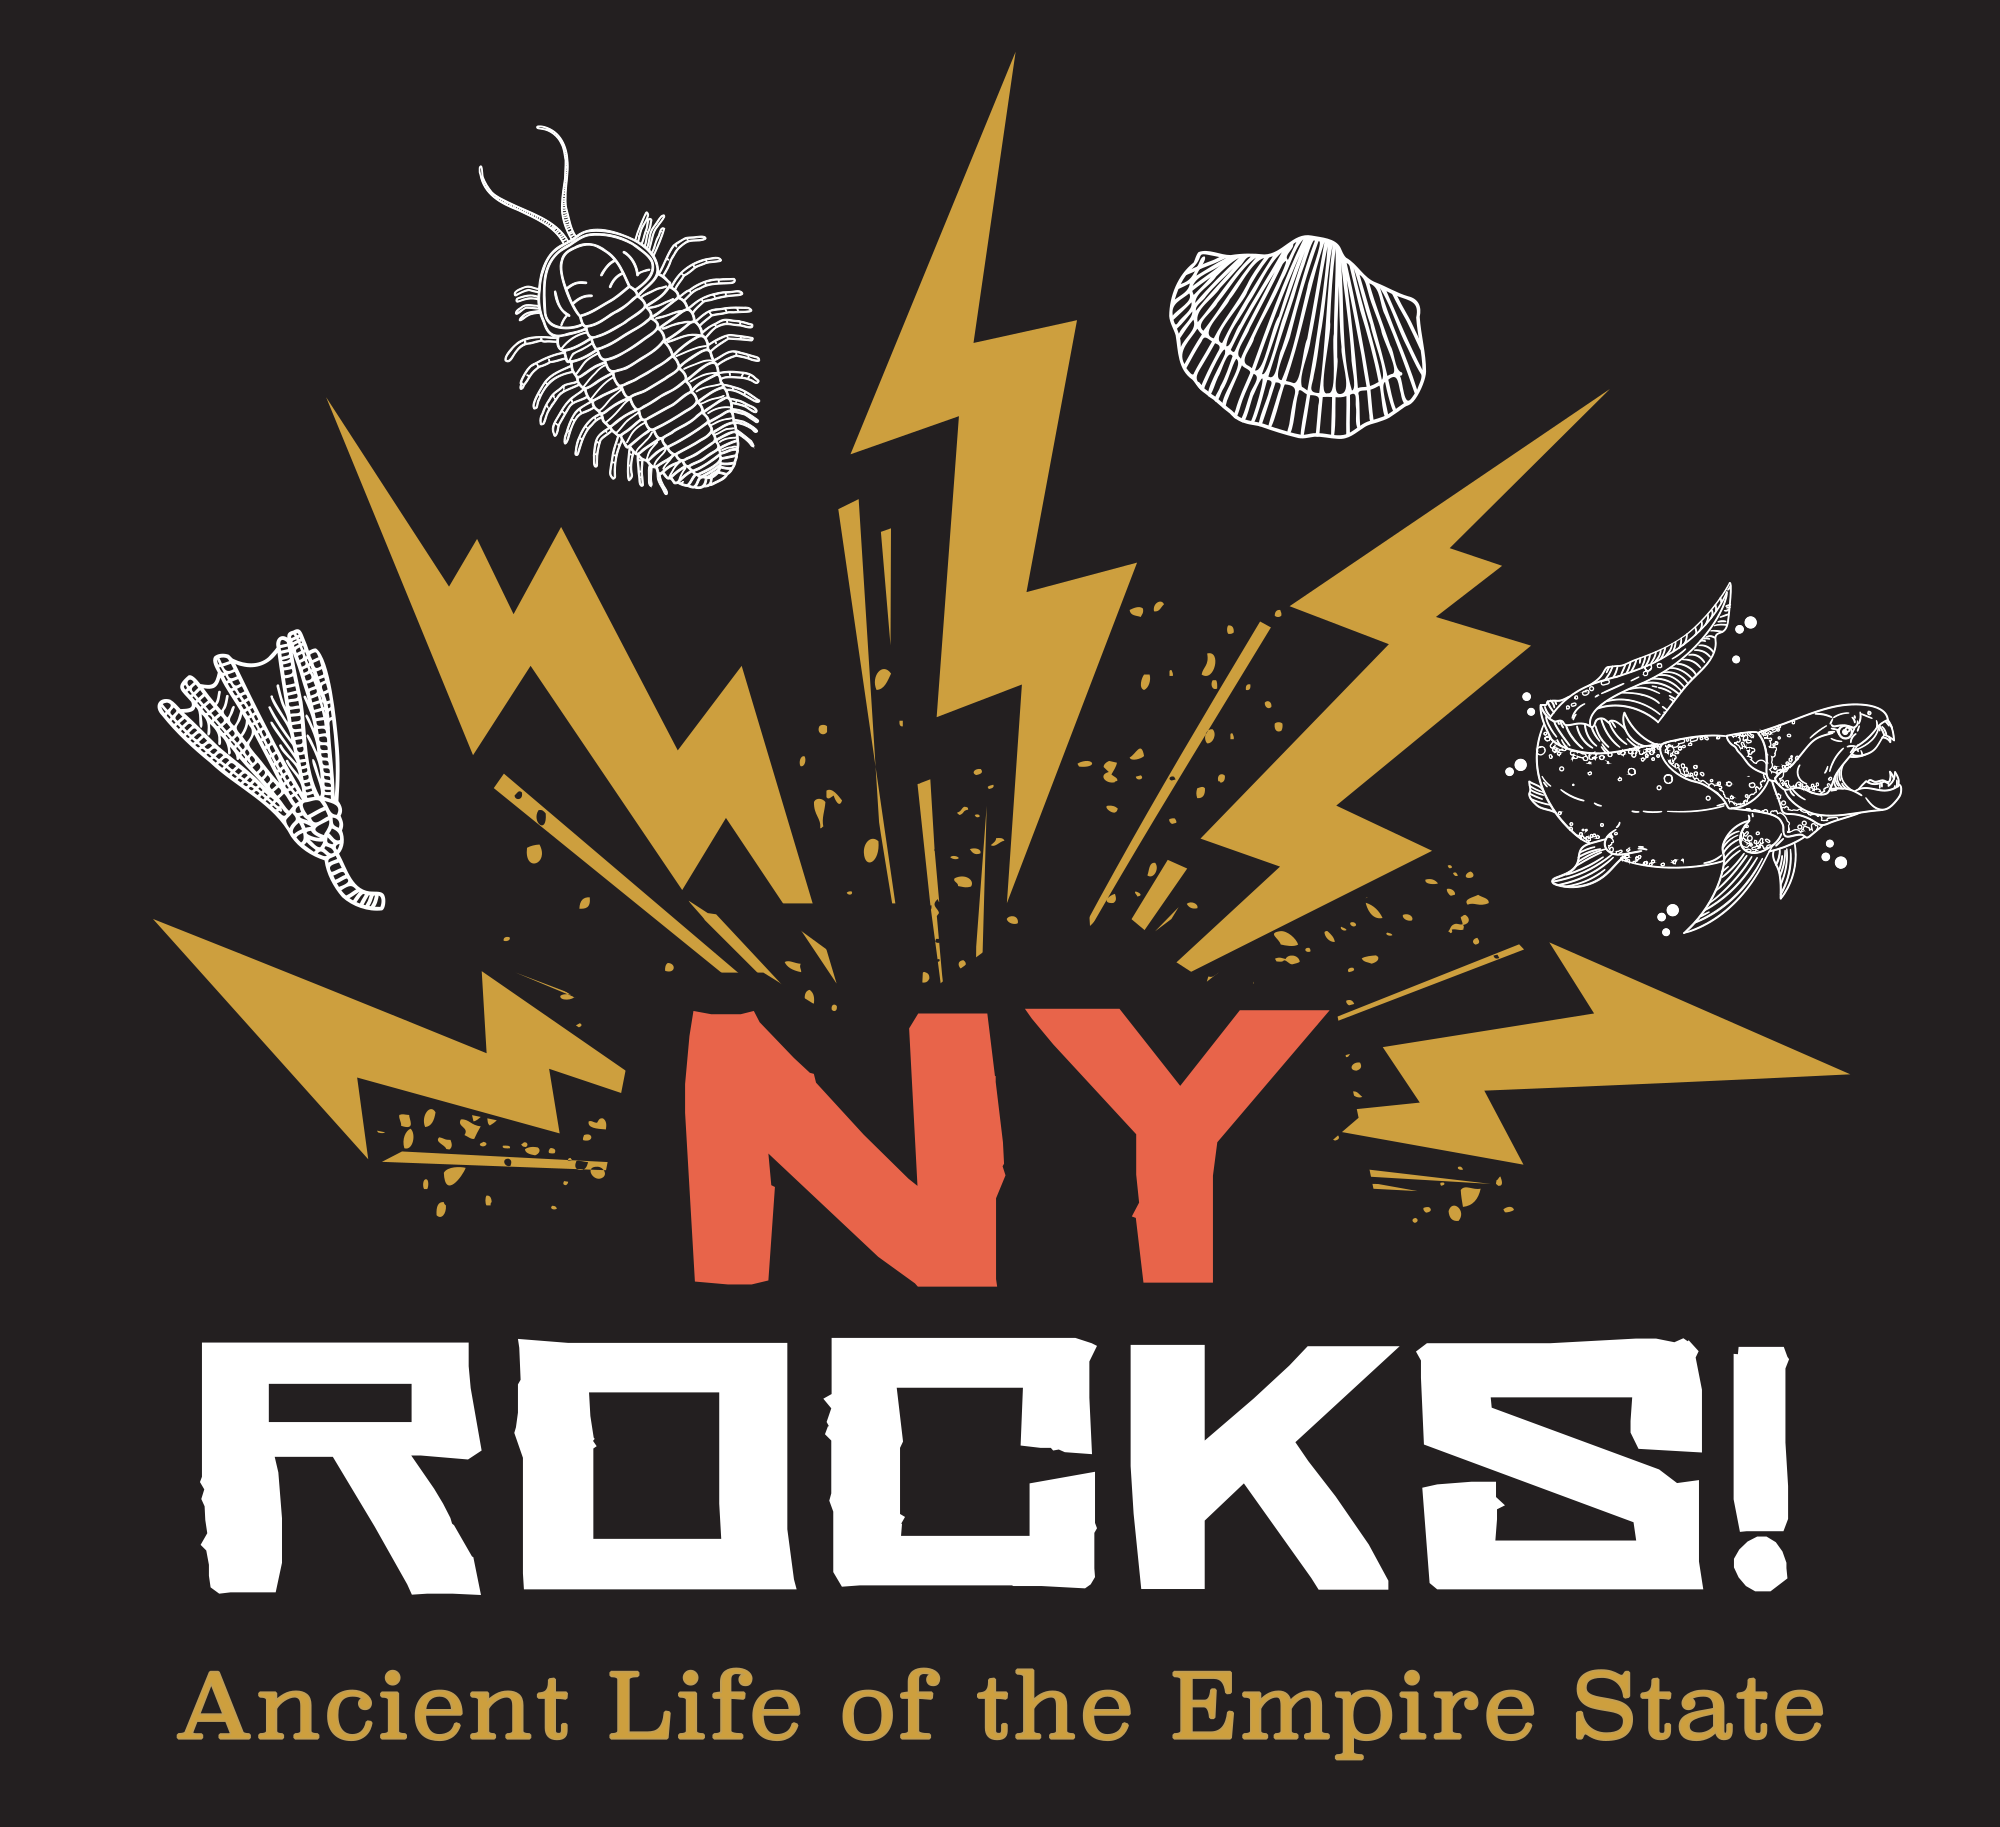 NY Rocks! Ancient Life of the Empire State